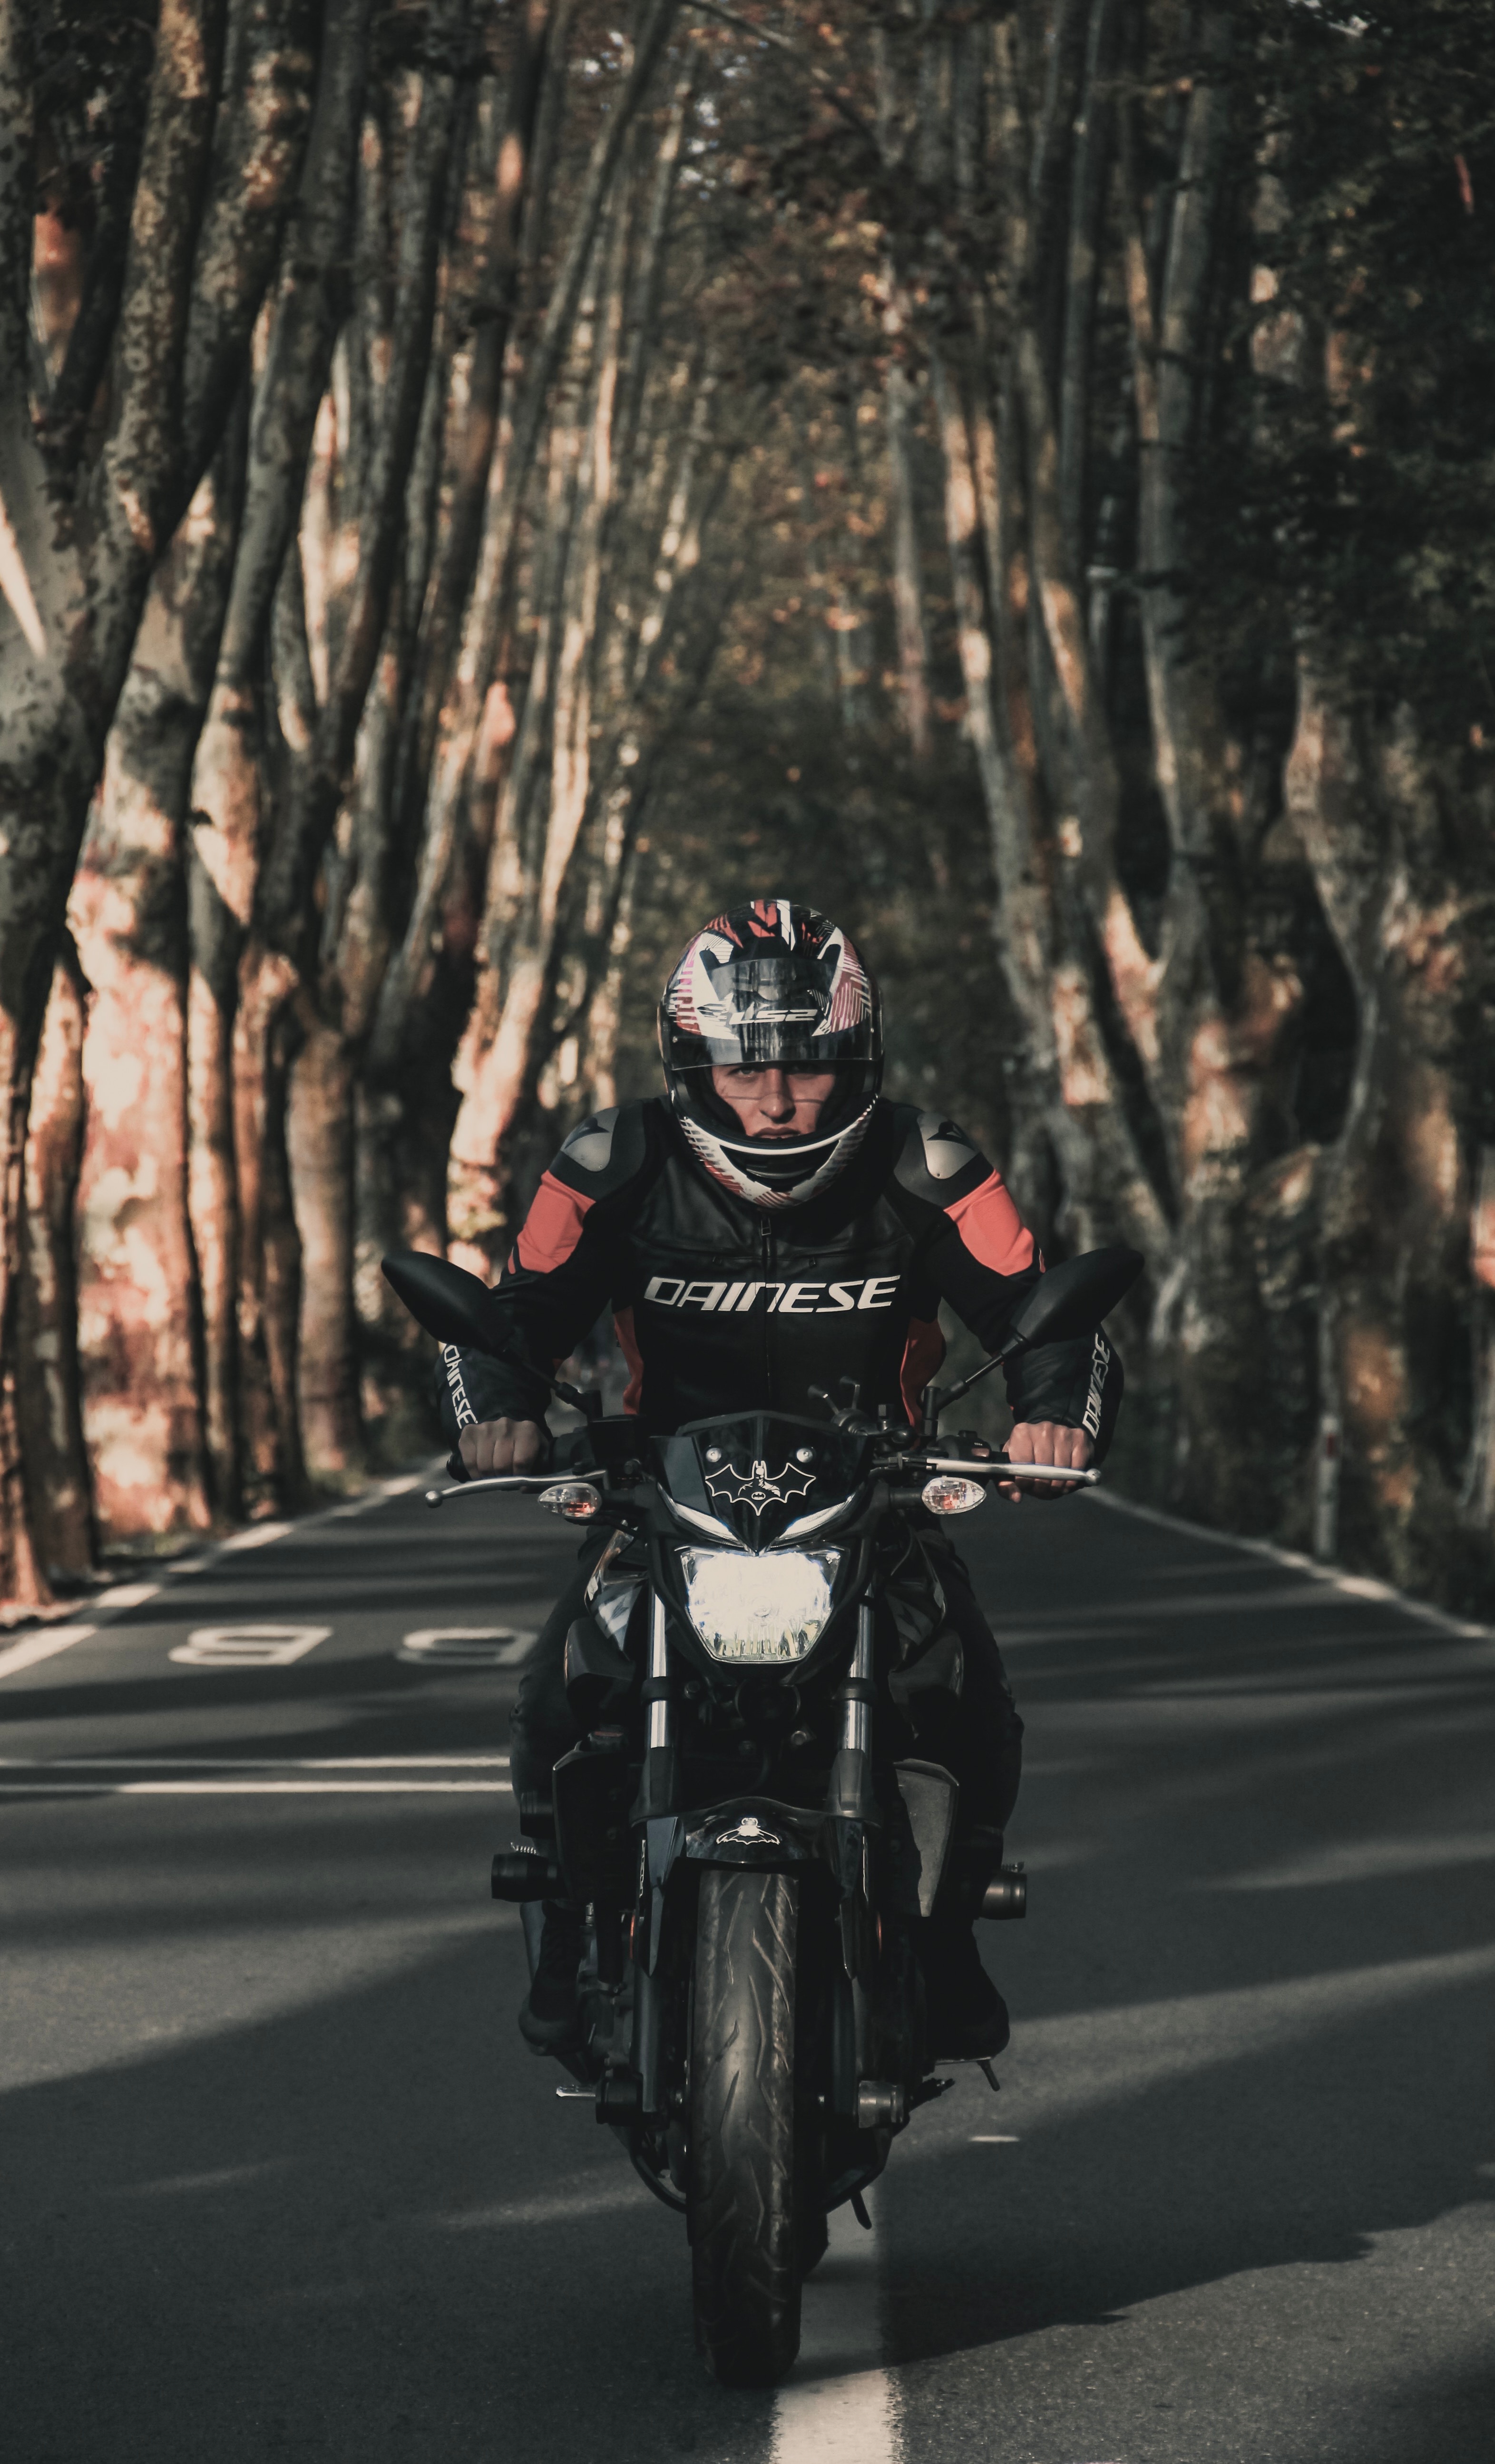 83135 Hintergrundbild herunterladen motorräder, straße, motorradfahrer, motorrad, fahrrad, biker - Bildschirmschoner und Bilder kostenlos